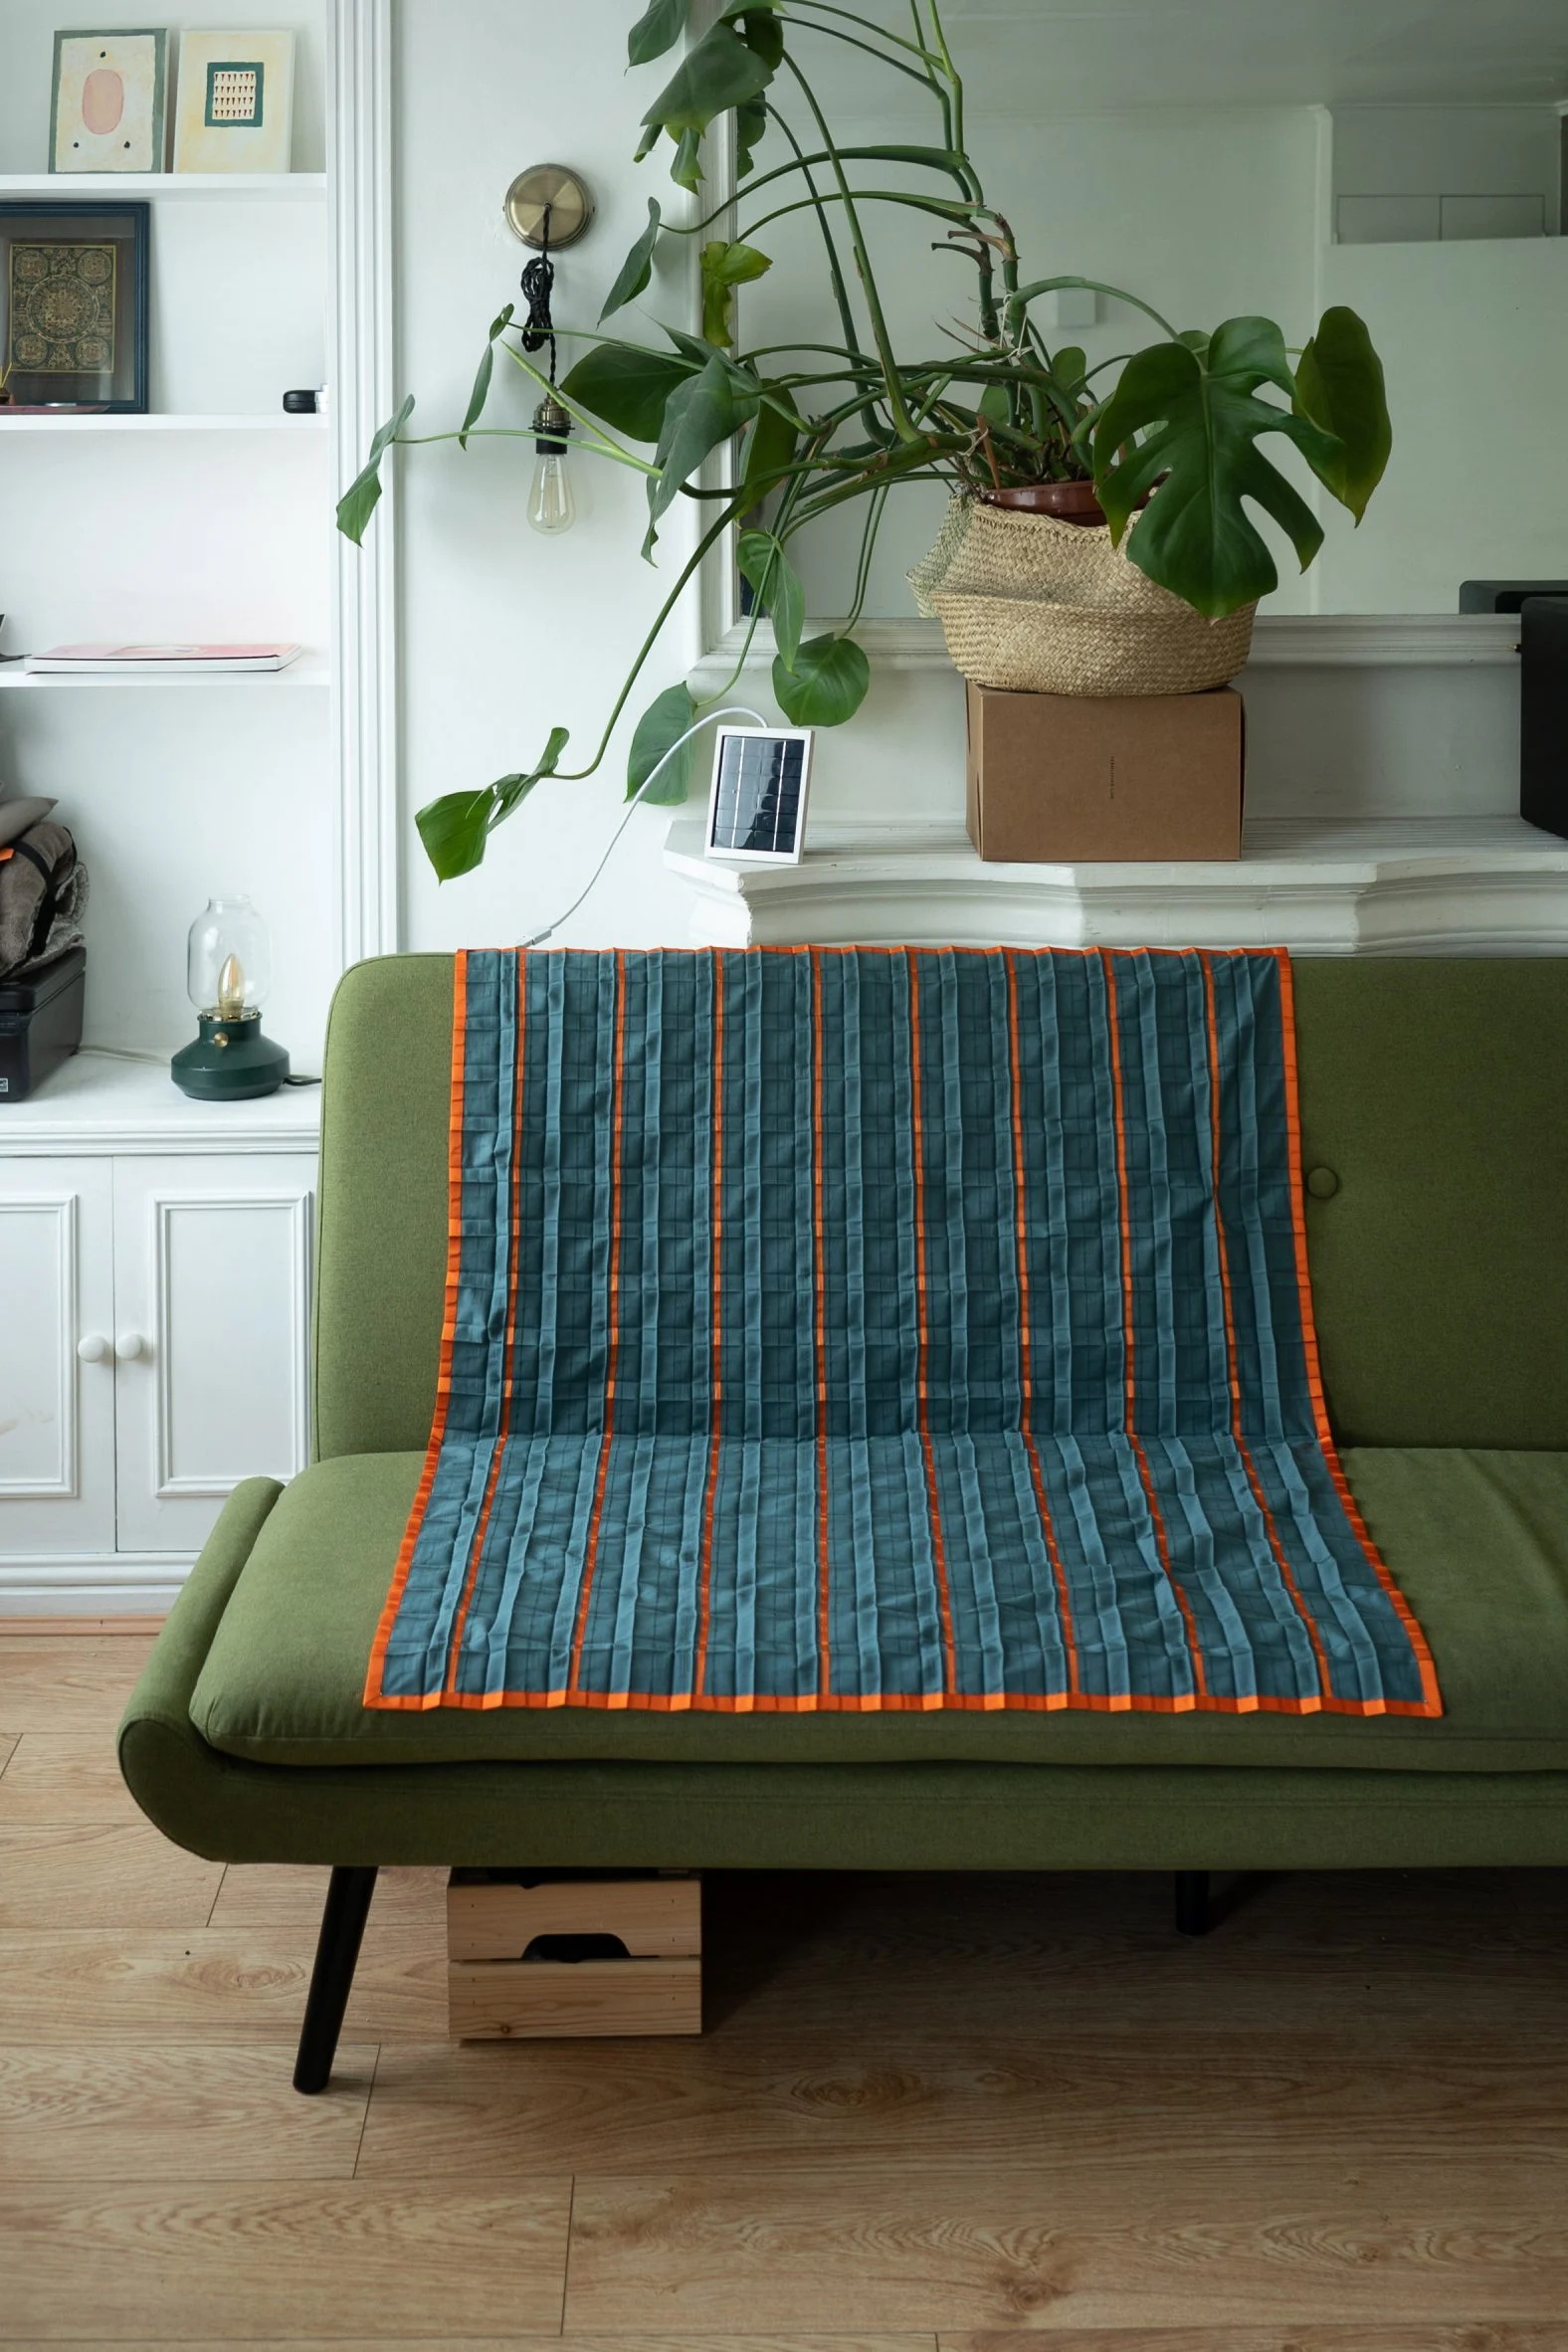 Mireille Steinhage创造了可持续太阳能毯